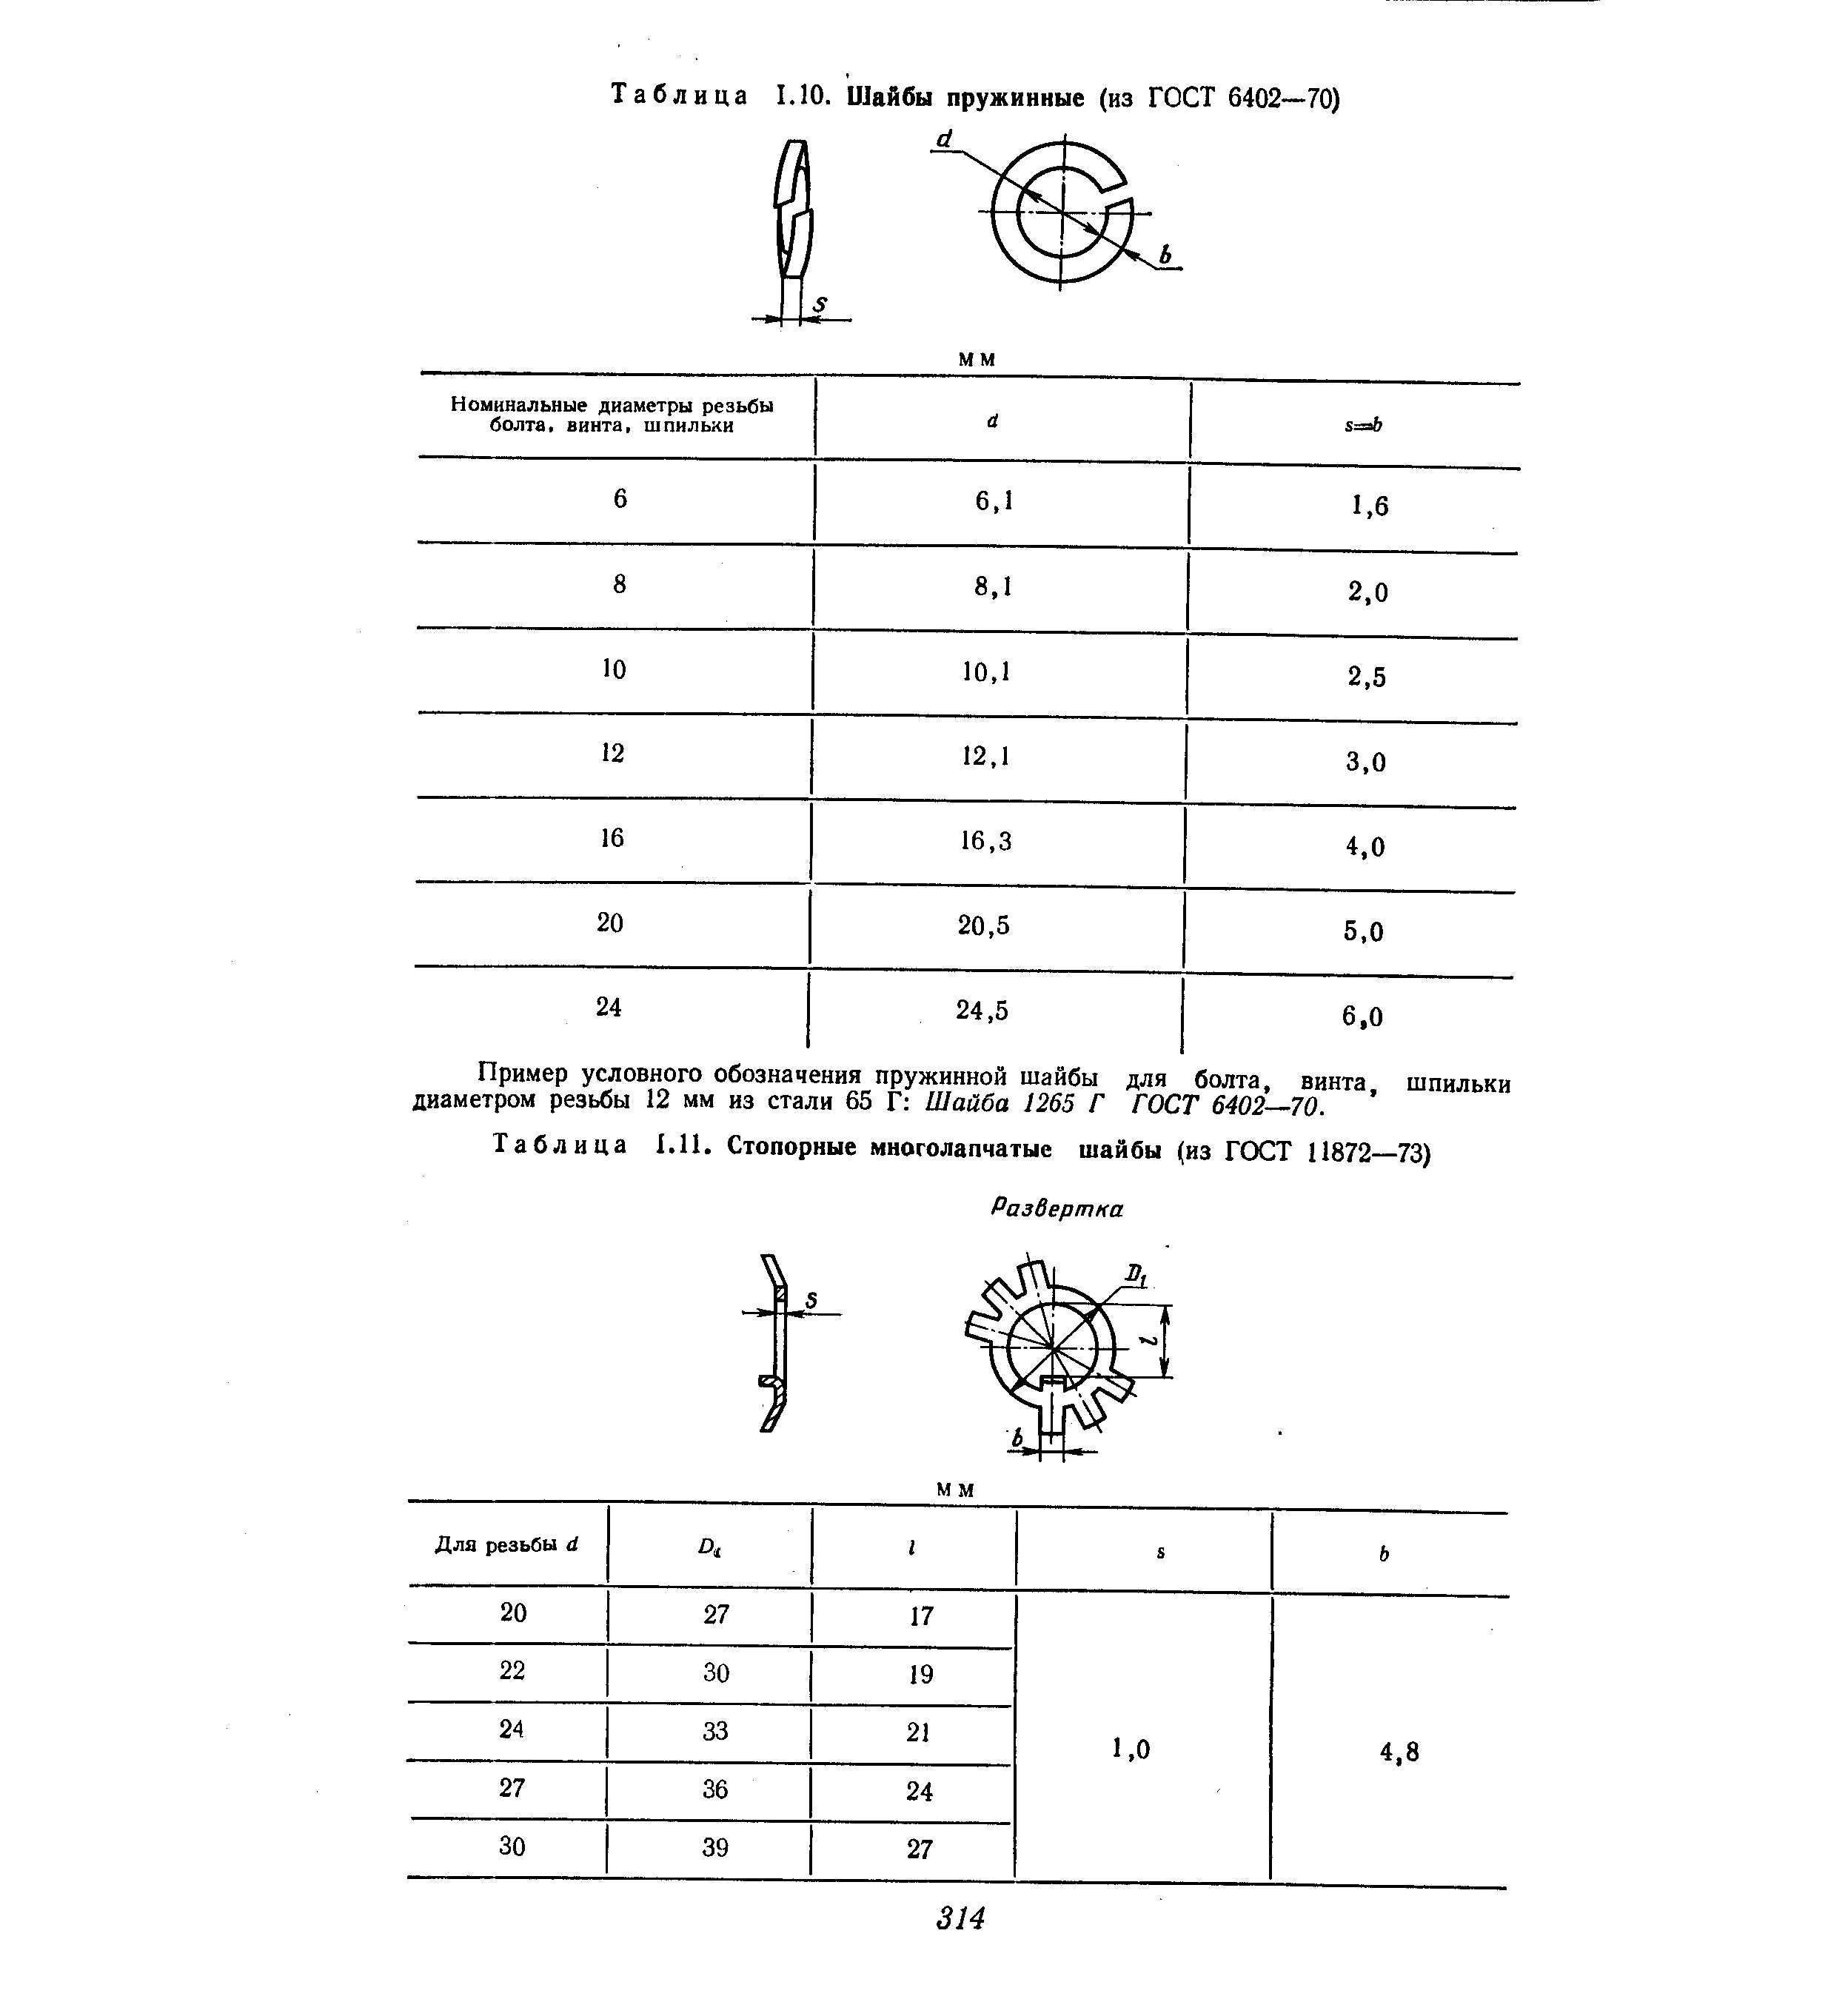 Таблица 1.11. Стопорные многолапчатые шайбы (из ГОСТ 11872—73)
